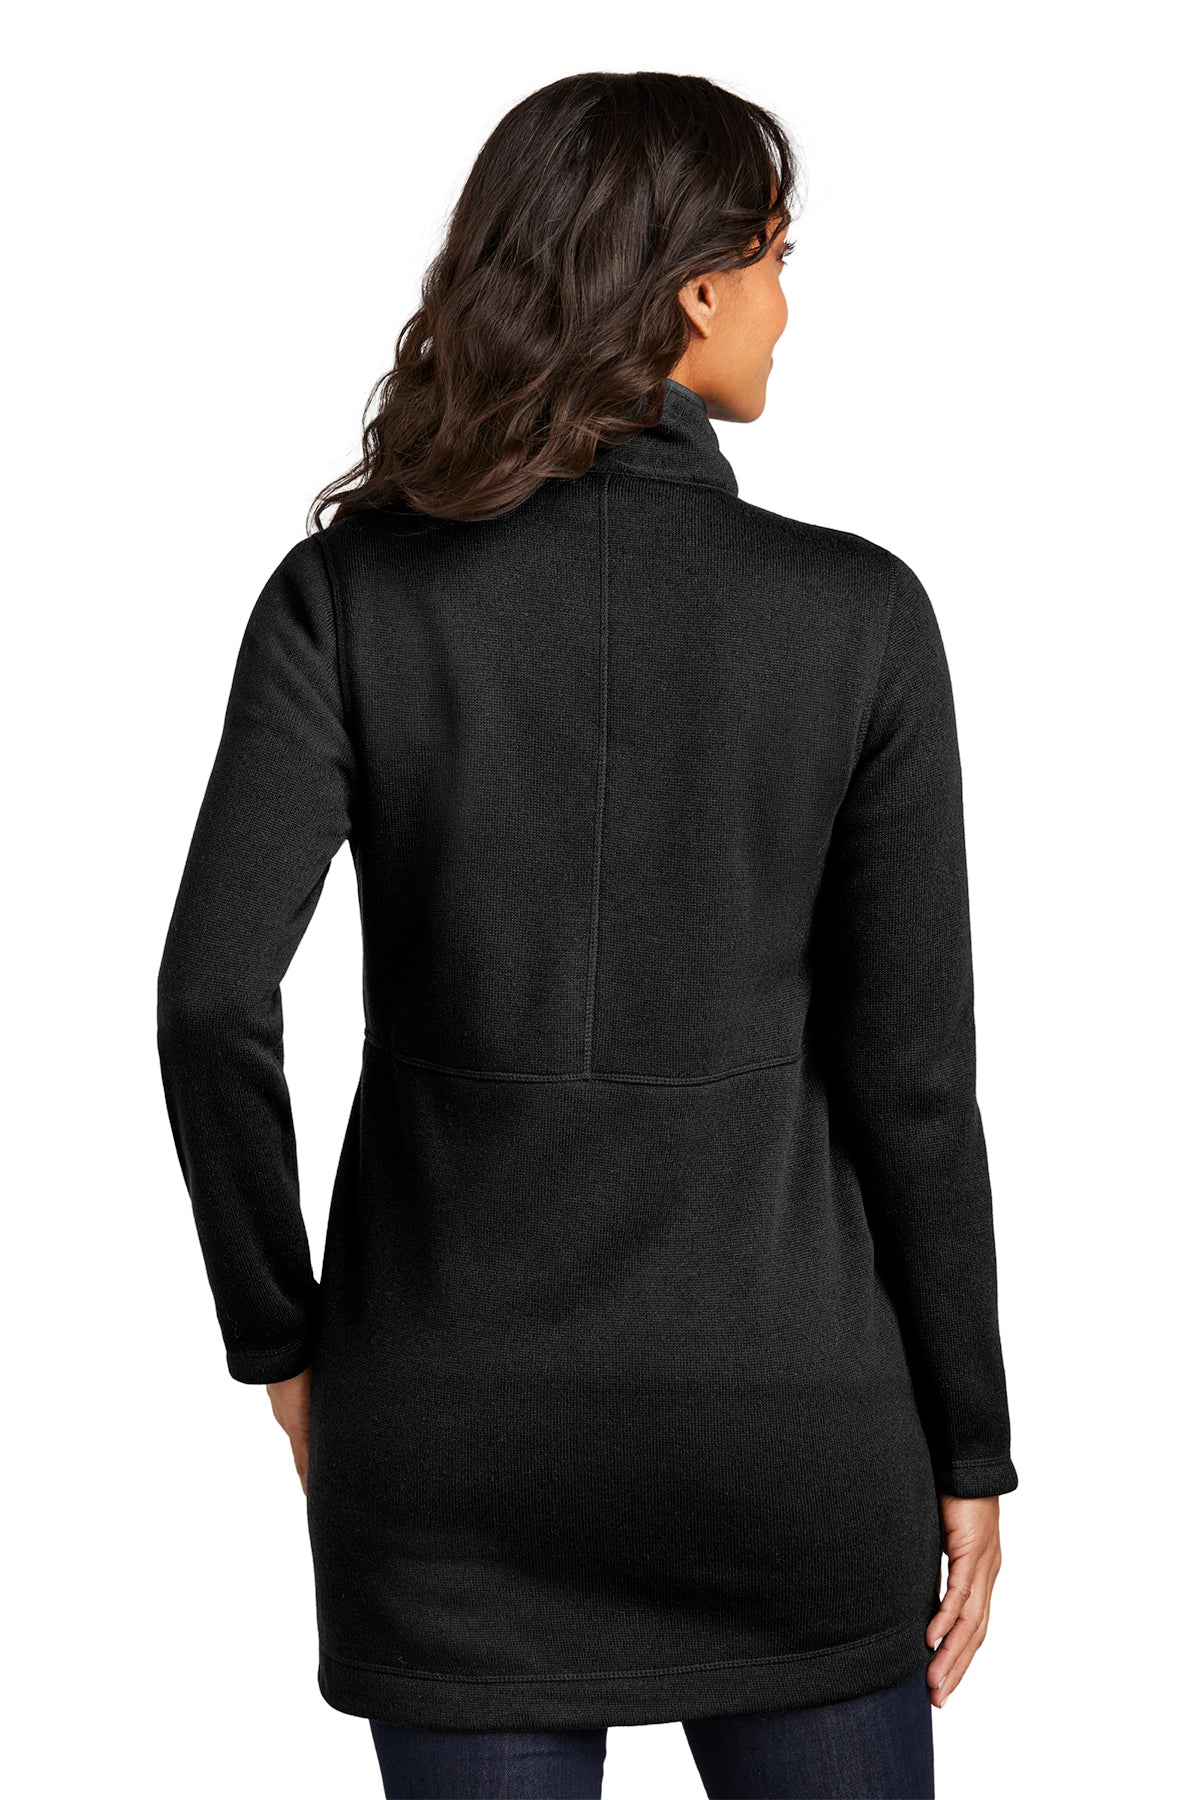 Port Authority Ladies Arc Sweater Fleece Long Customized Jackets, Deep Black